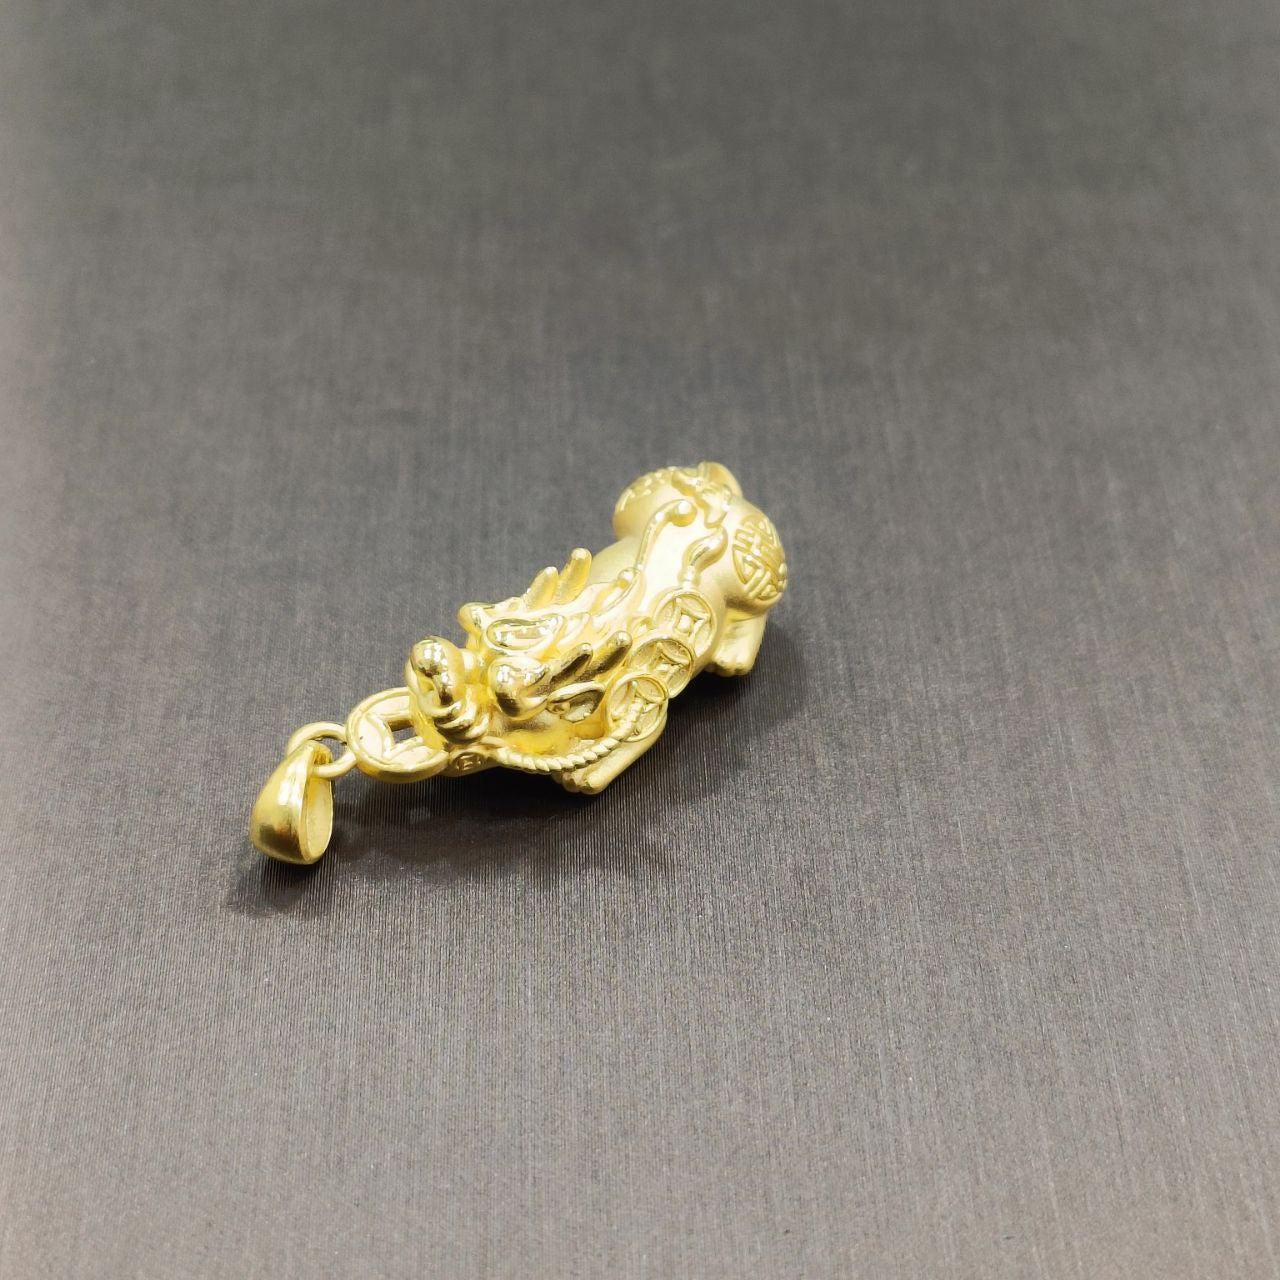 24k / 999 Gold Hollow Pixiu Pendant-999 gold-Best Gold Shop